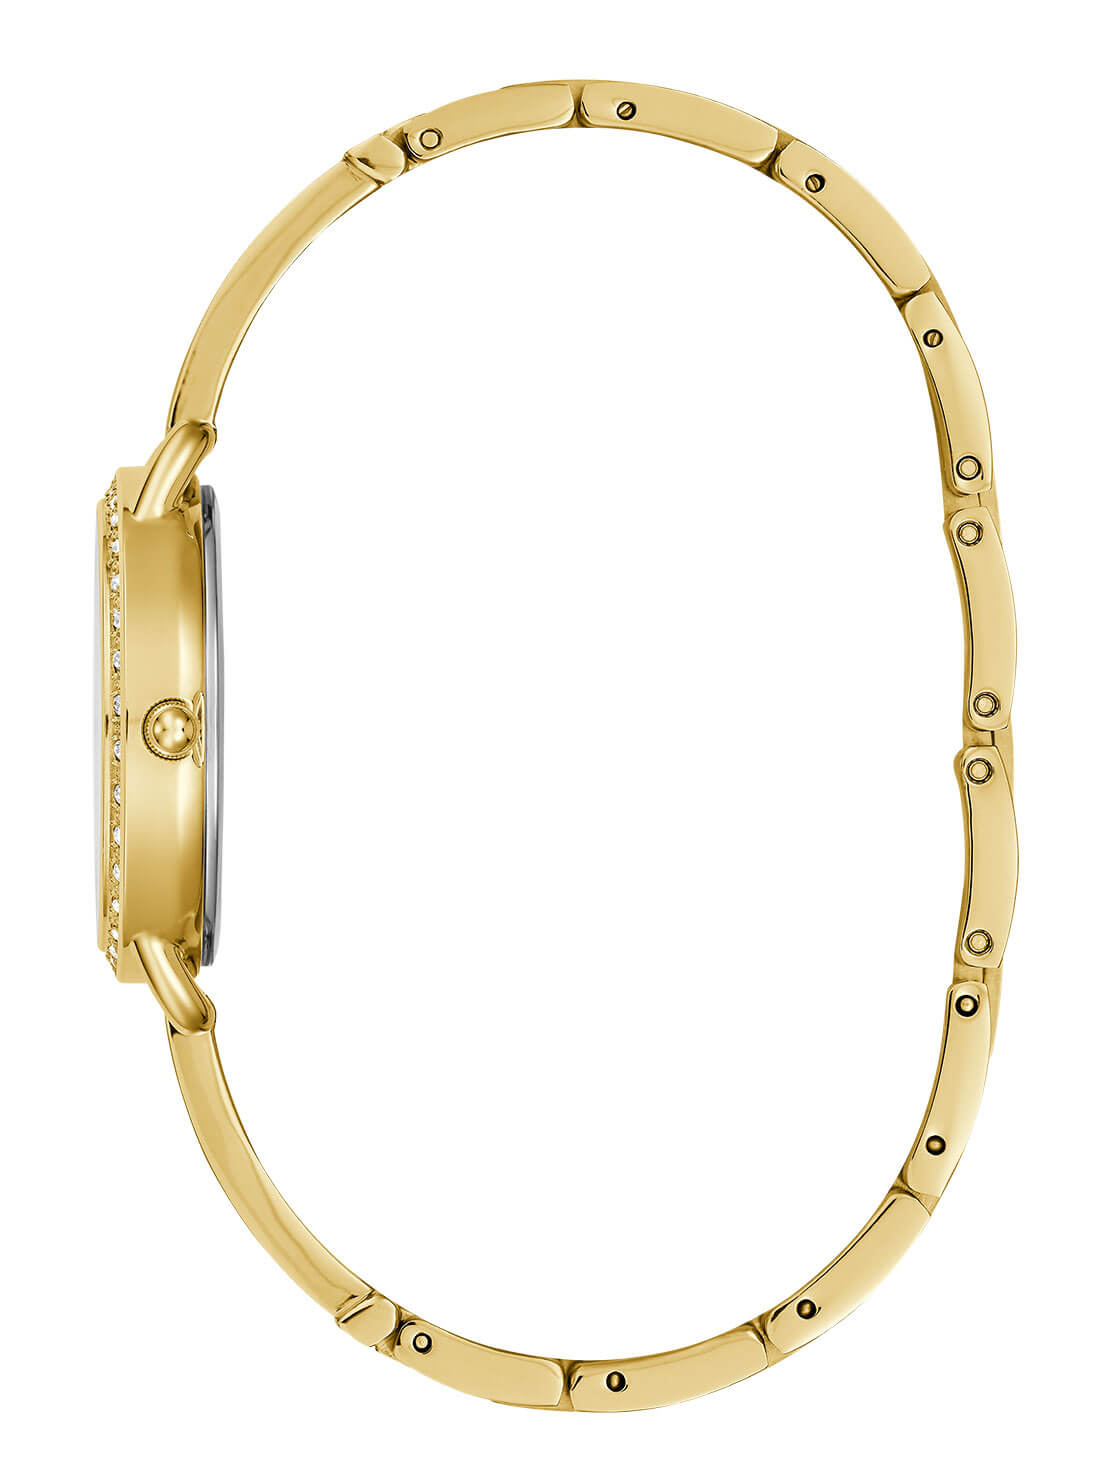 GUESS Women's Gold Bellini Crystal Watch GW0022L2 Side View